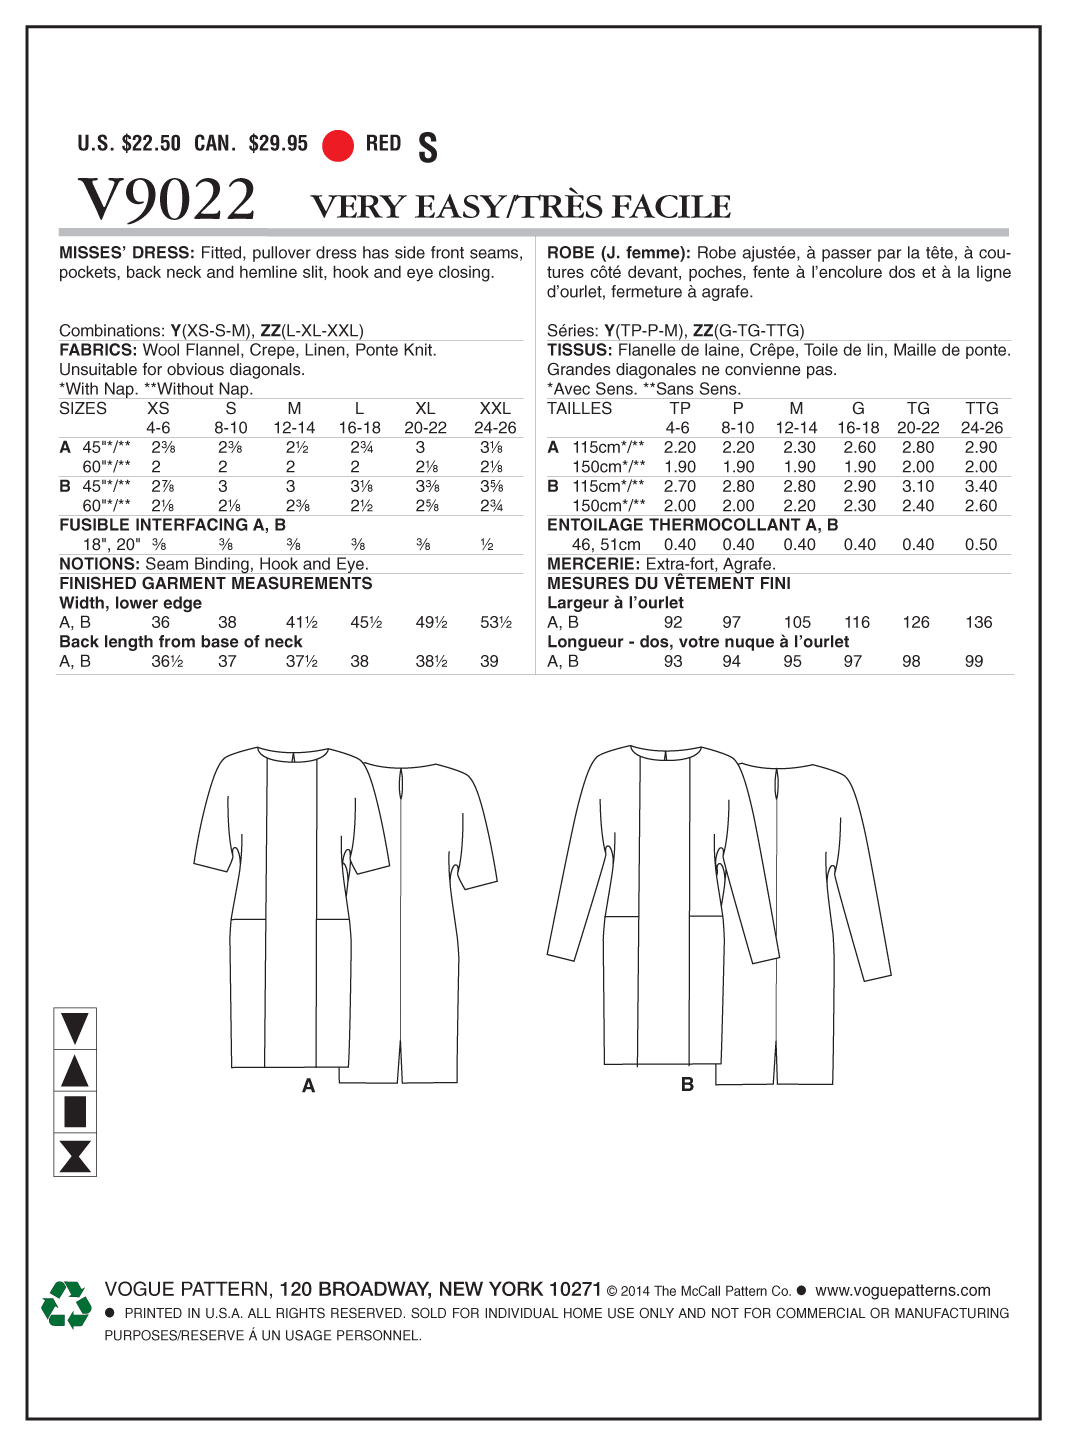 Vogue Sewing Pattern Misses' Dress 9022ZZ (Sizes L-XL-XXL)